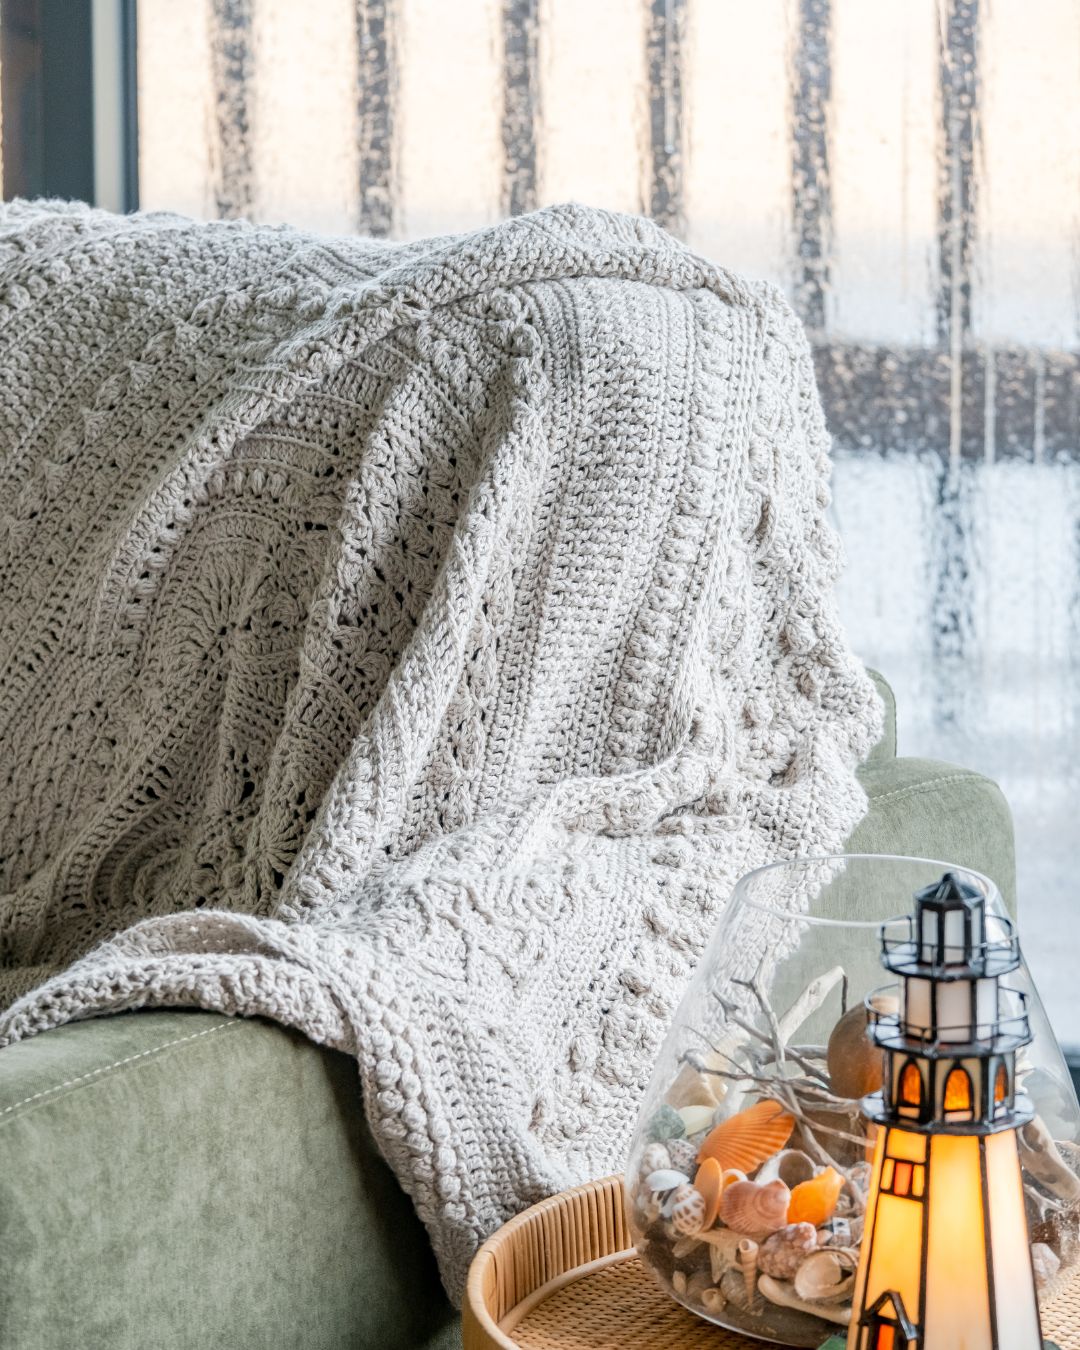 The Cove Crochet Blanket Book WS